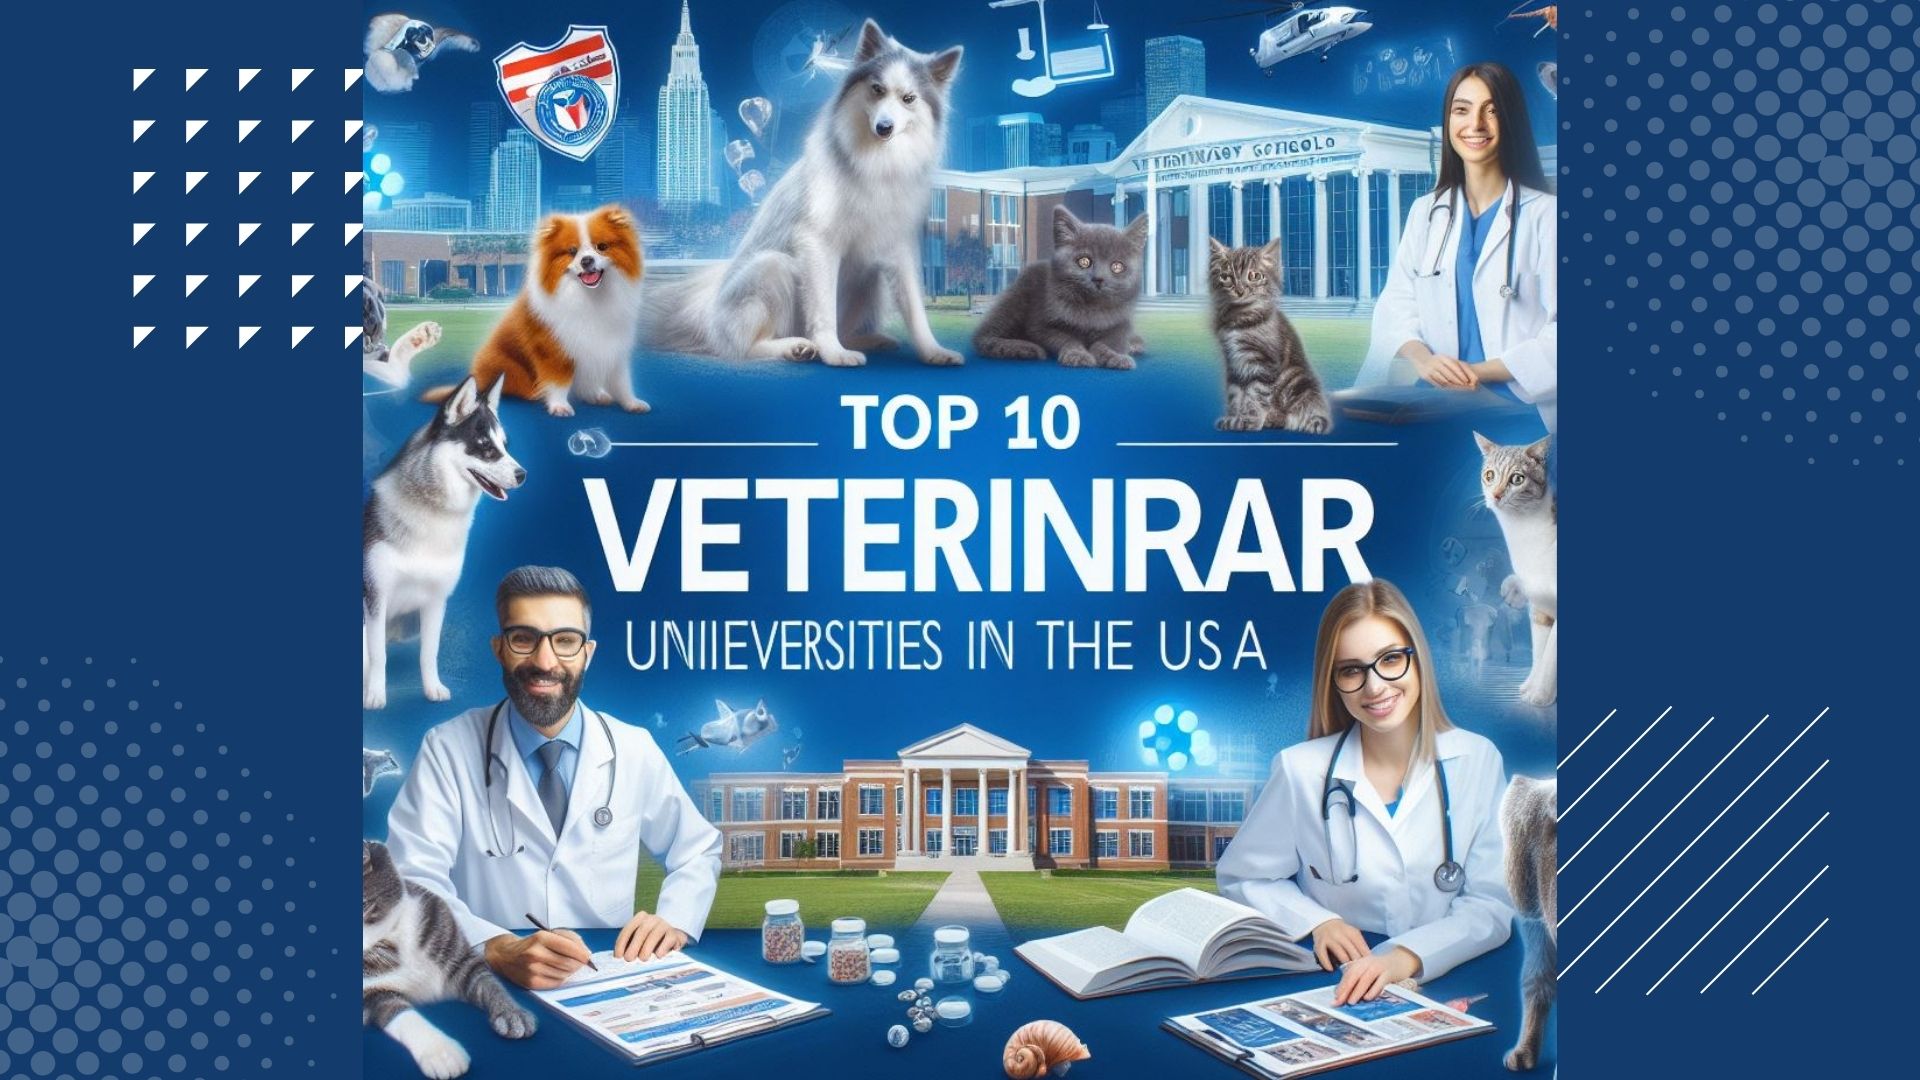 Top 10 Veterinary Universities in the USA